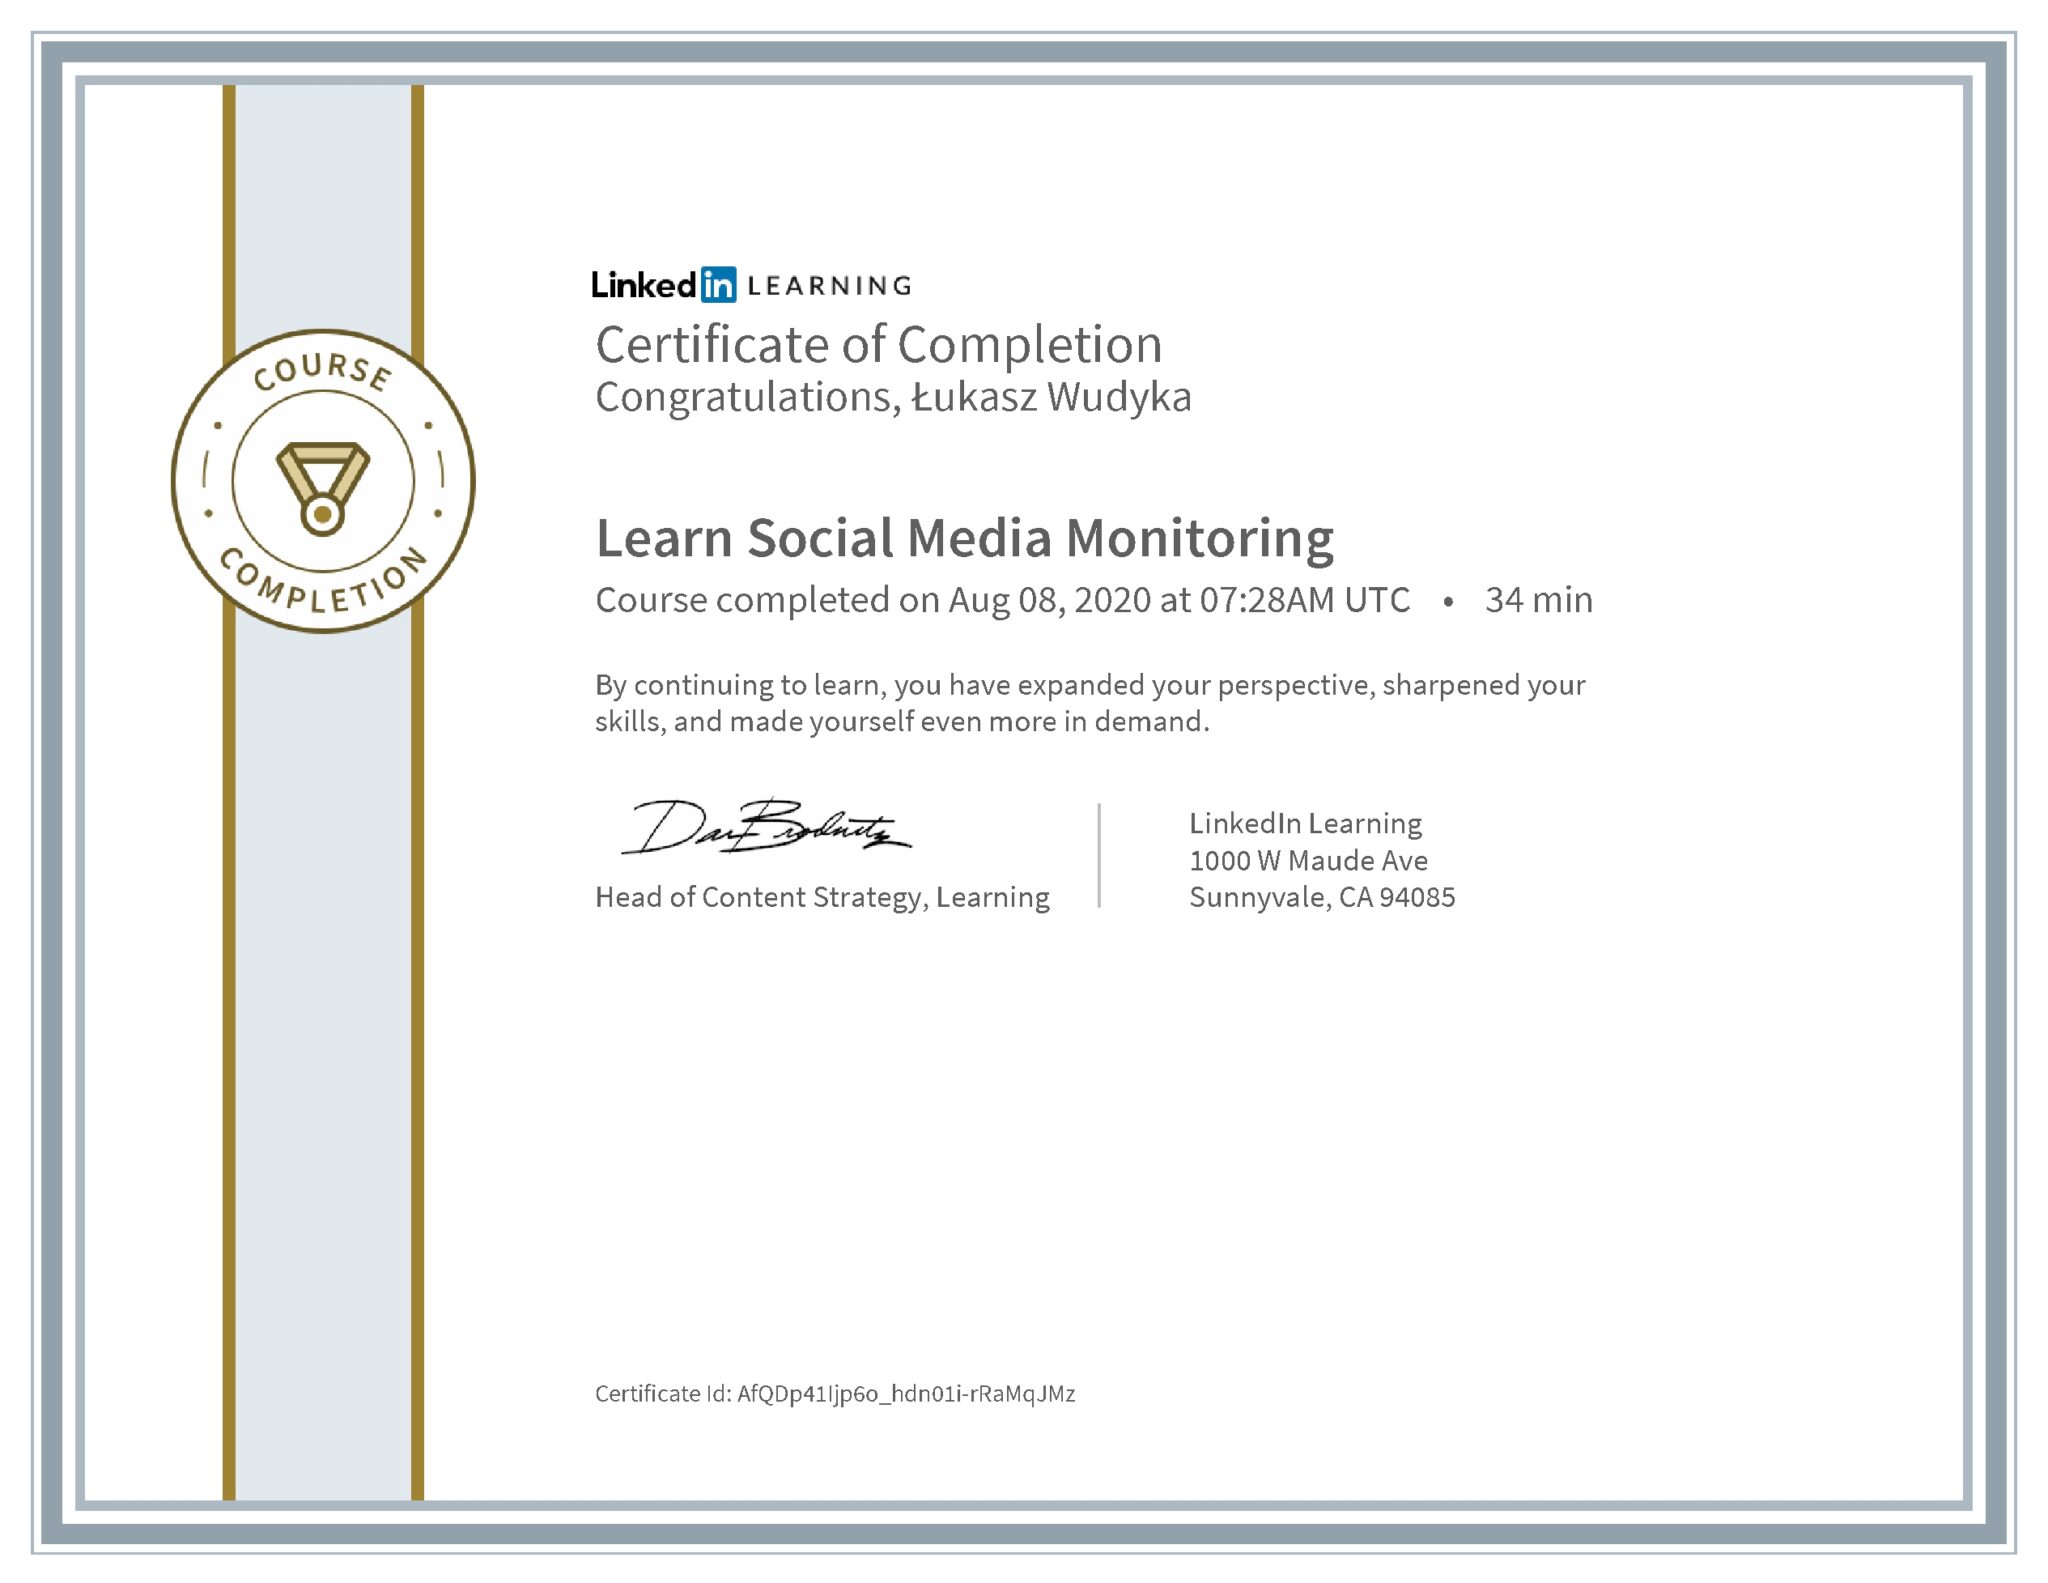 Łukasz Wudyka certyfikat LinkedIn Learn Social Media Monitoring